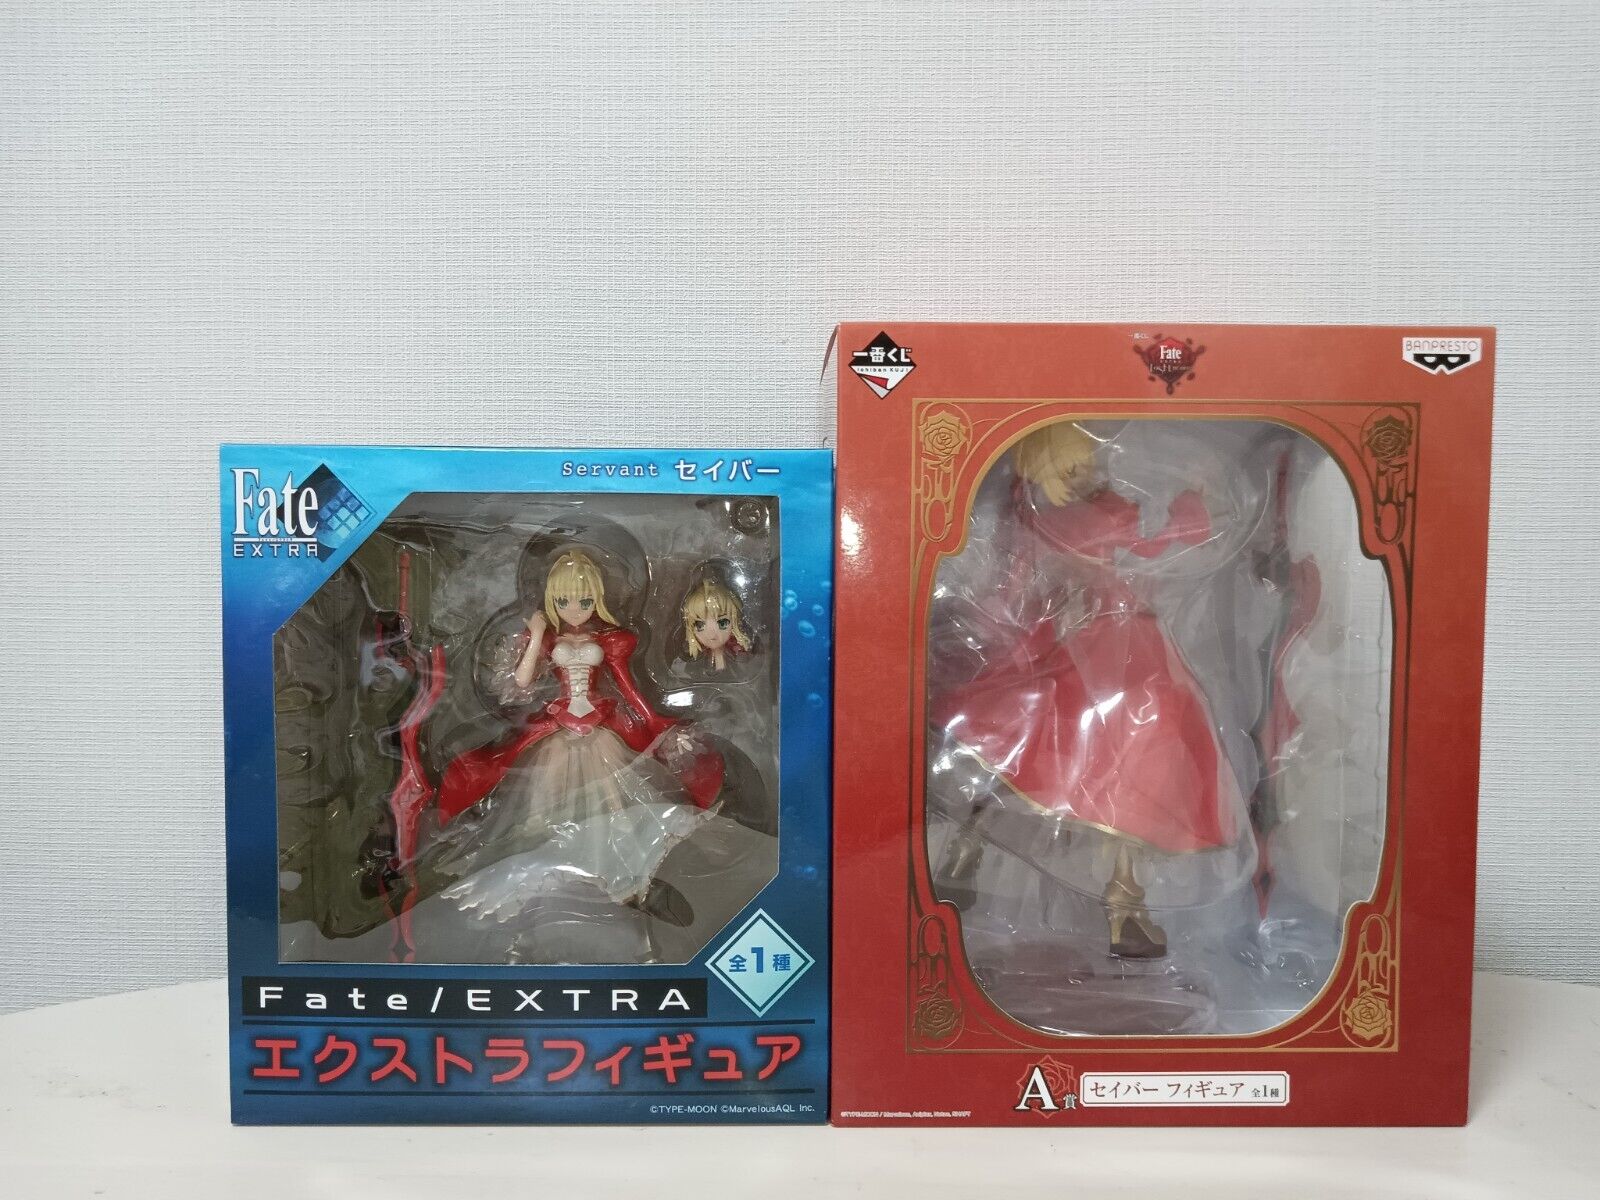 Fate/EXTRA Saber Nero Claudius Figure 2 set SEGA & BANPRESTO Ichiban Kuji Prize